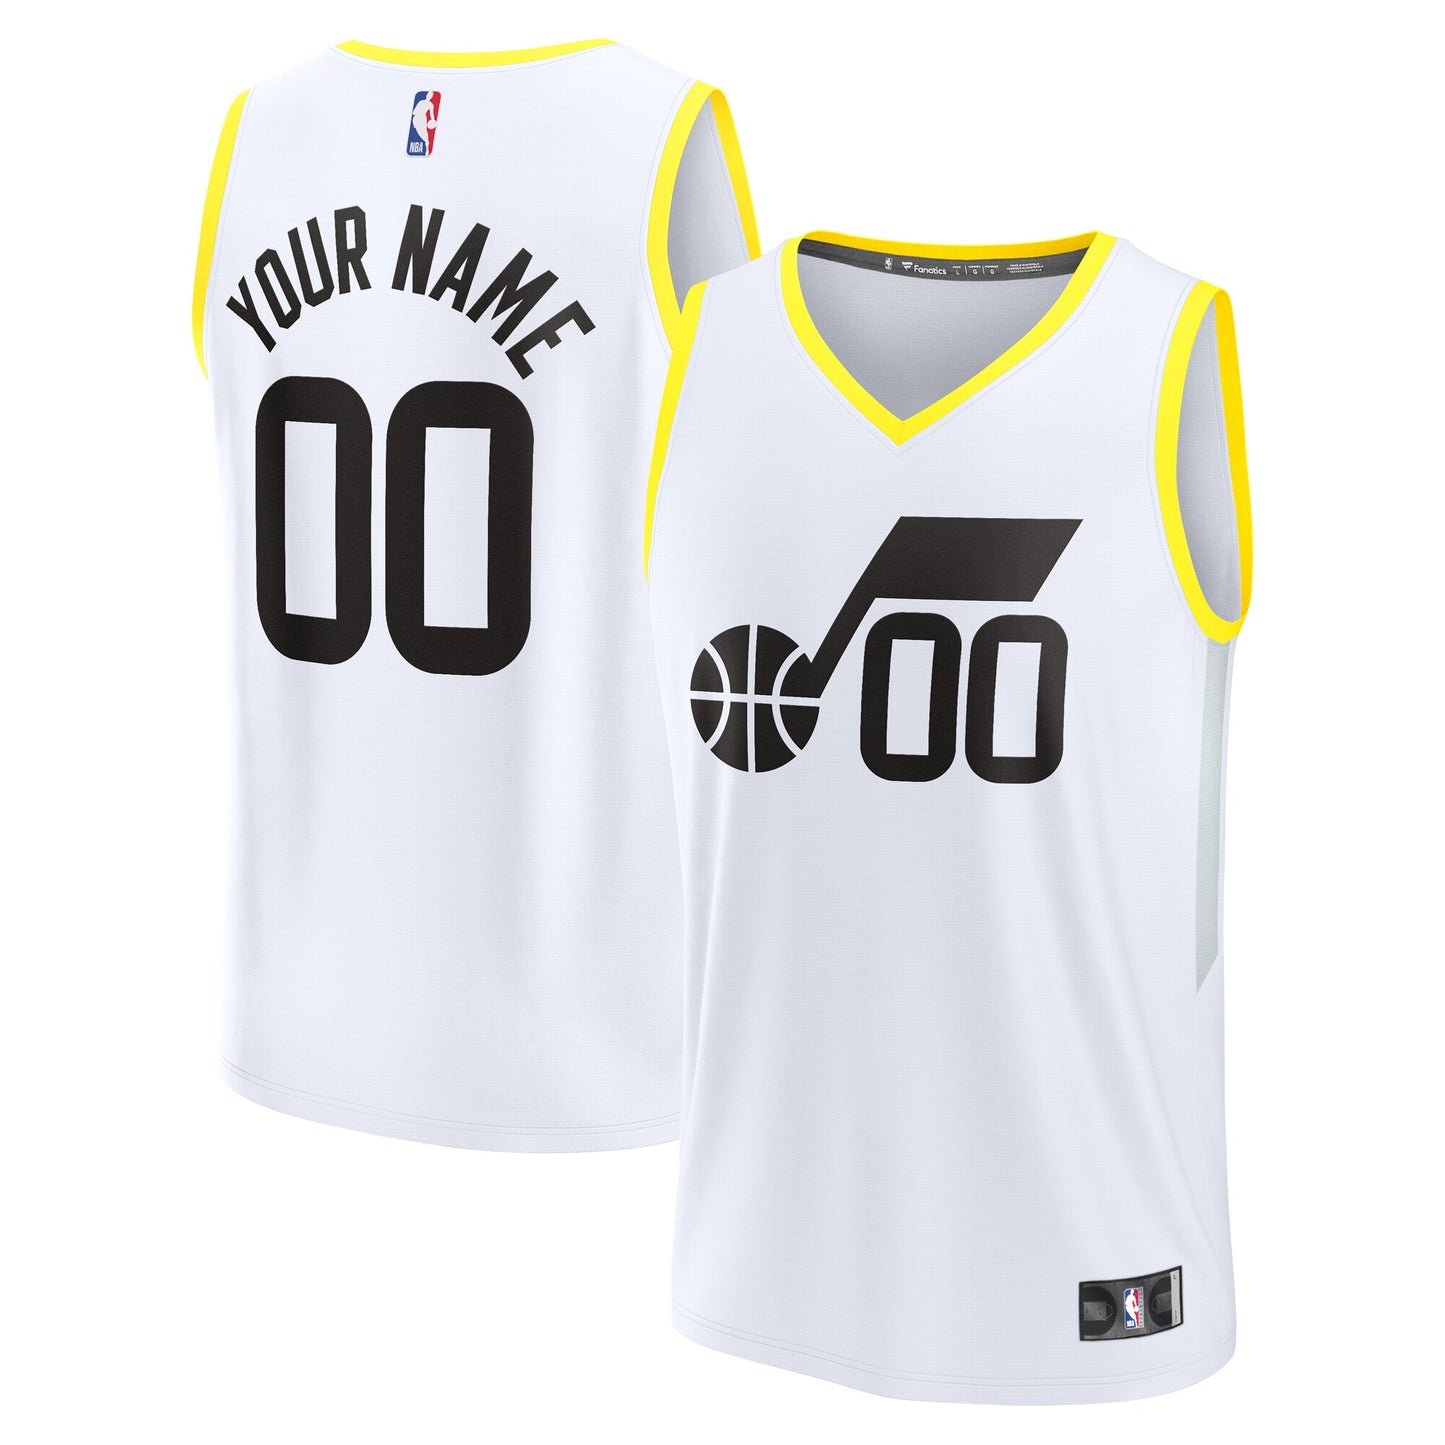 Utah Jazz Fanatics Branded Fast Break Custom Replica Jersey - Association Edition - White